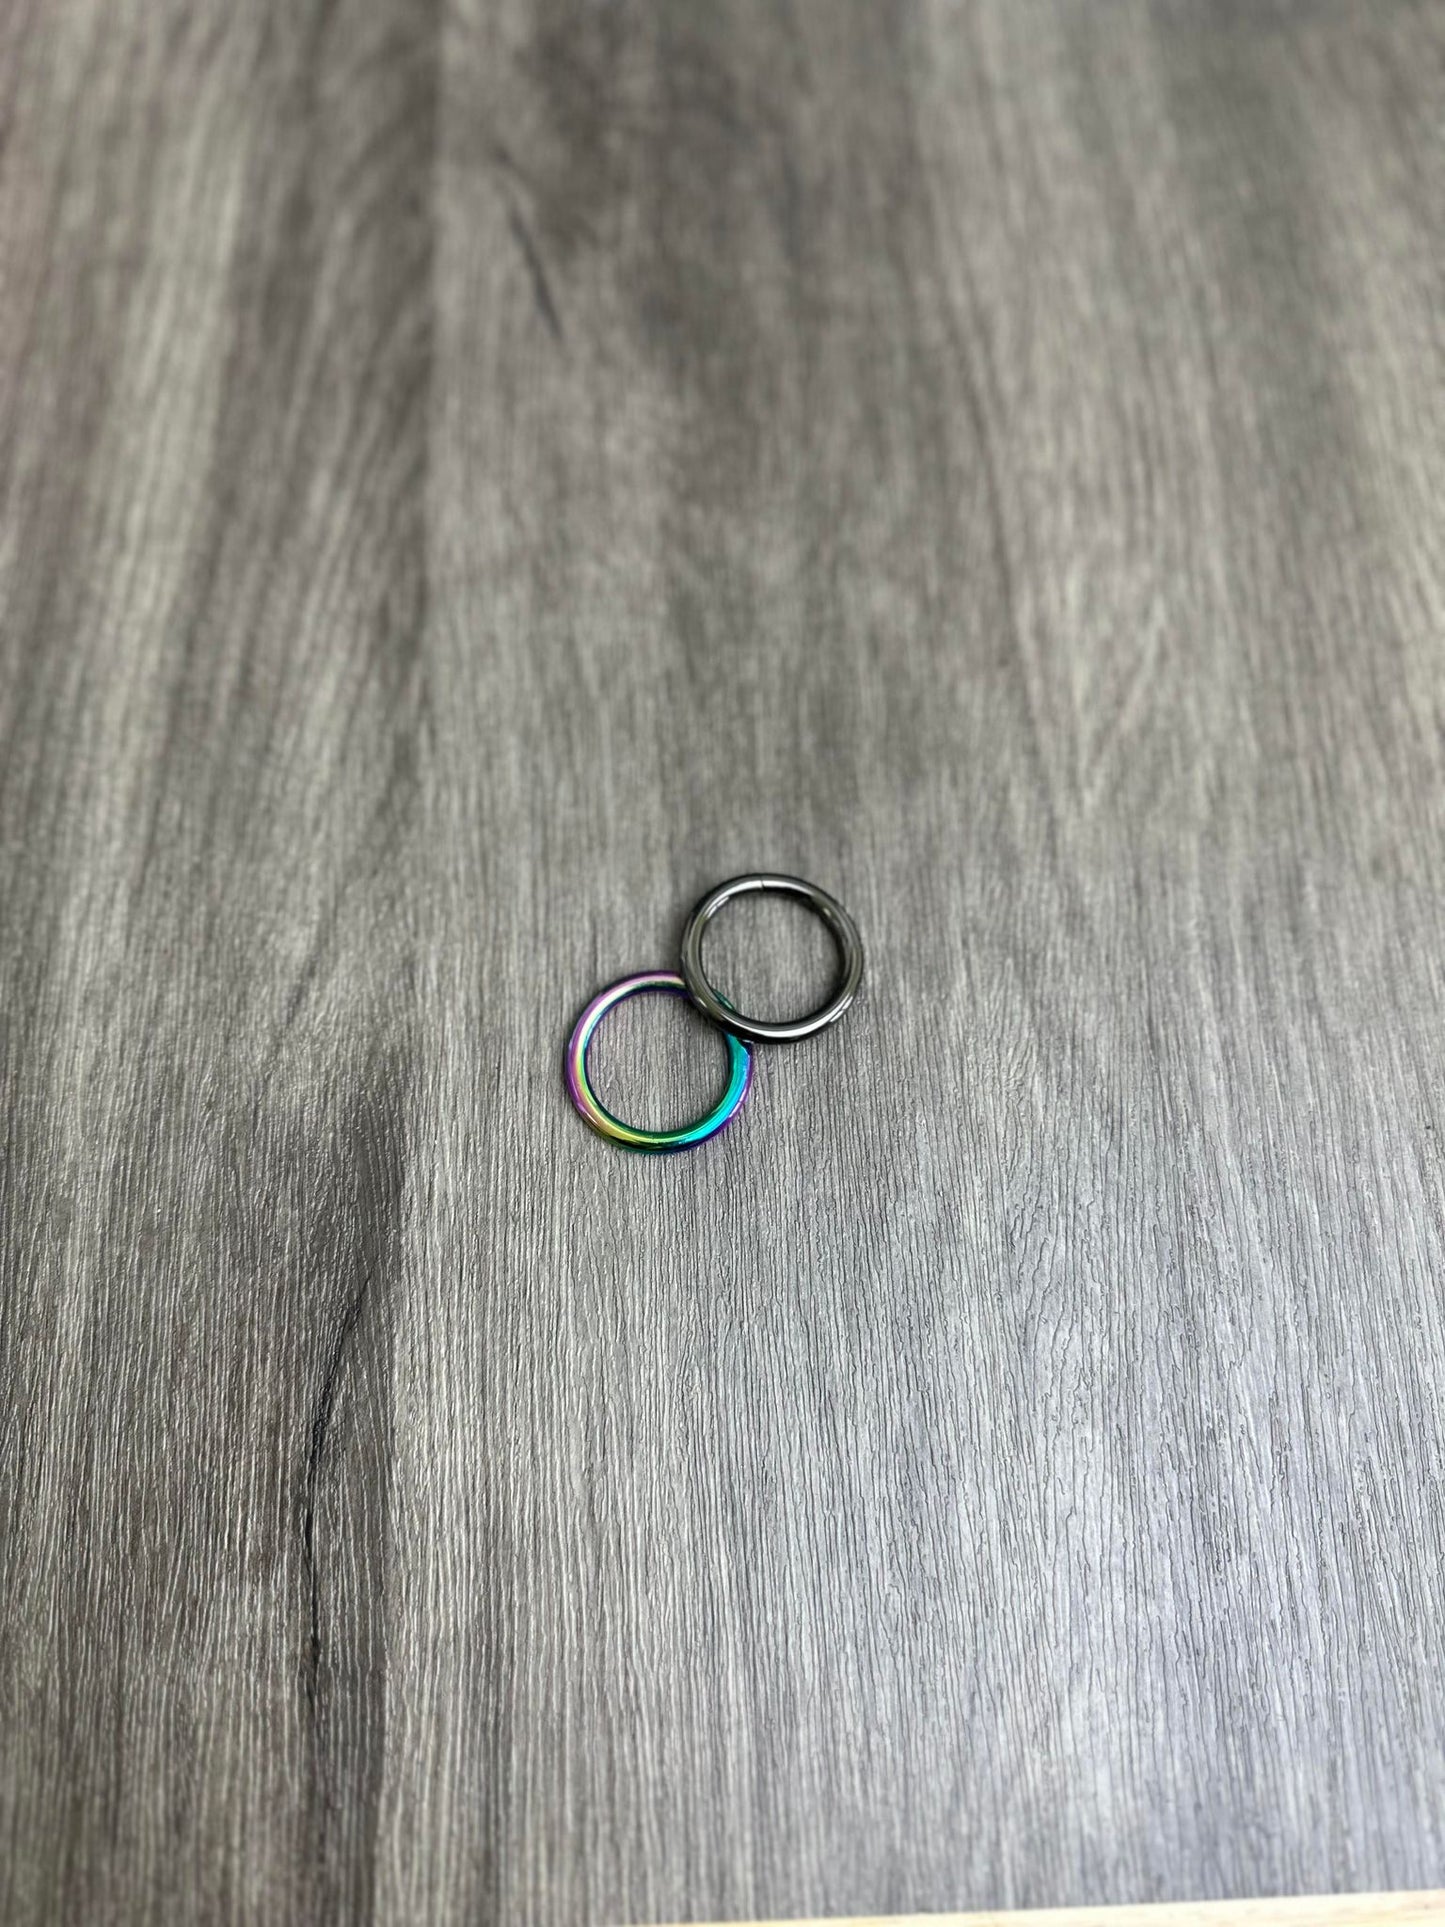 1" O-Rings